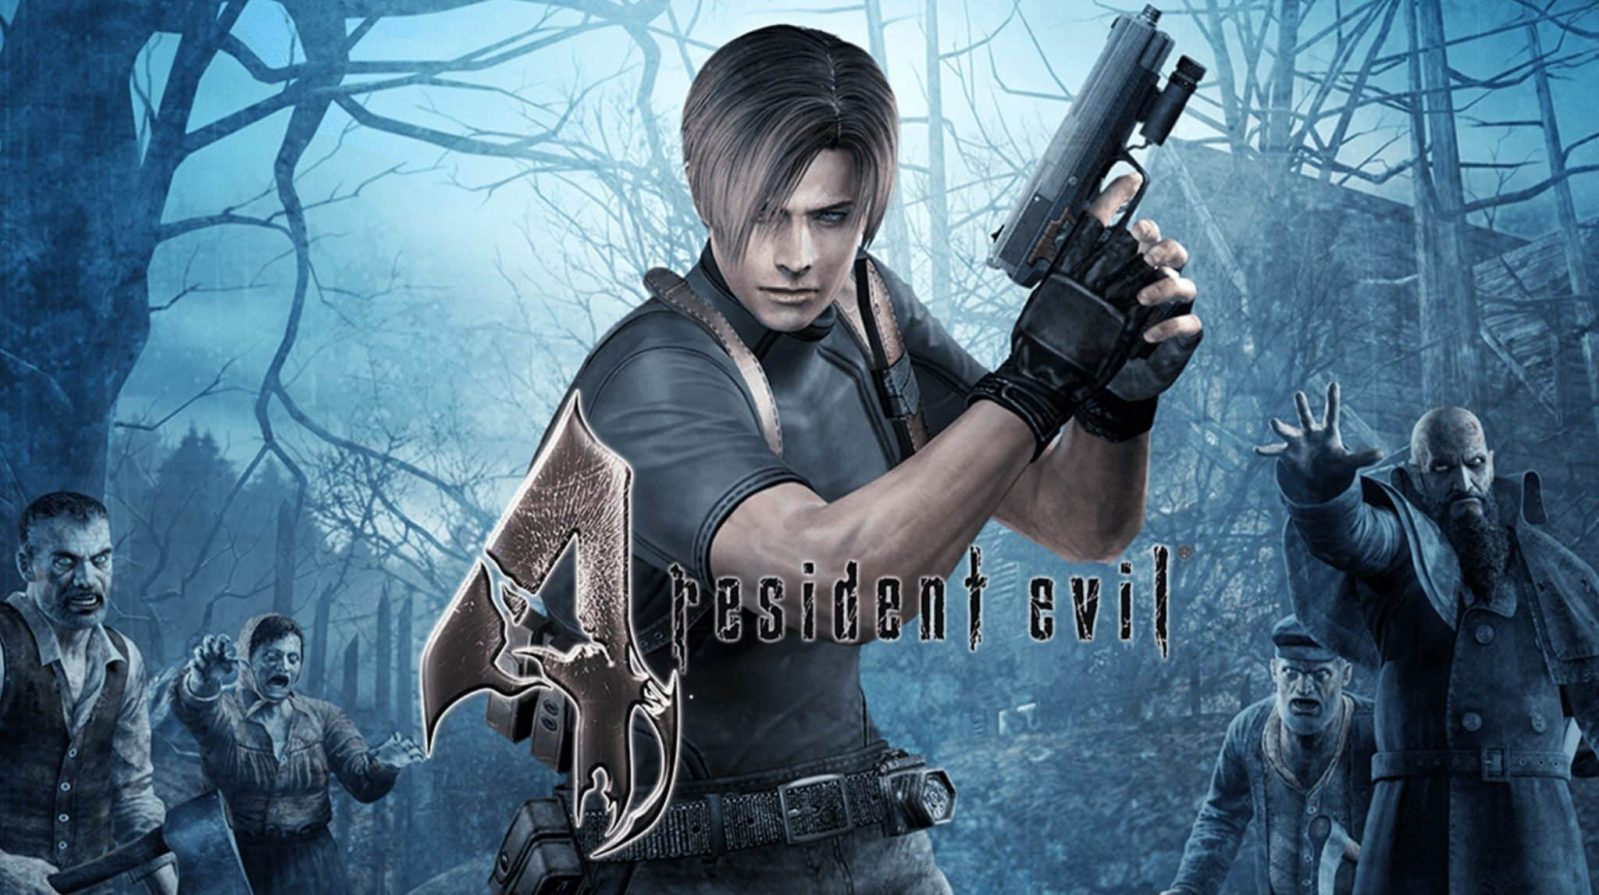 Resident Evil 4 Remake – Krauser Fight, Salazar Castle, Upgrades, and More  Revealed in New Gameplay